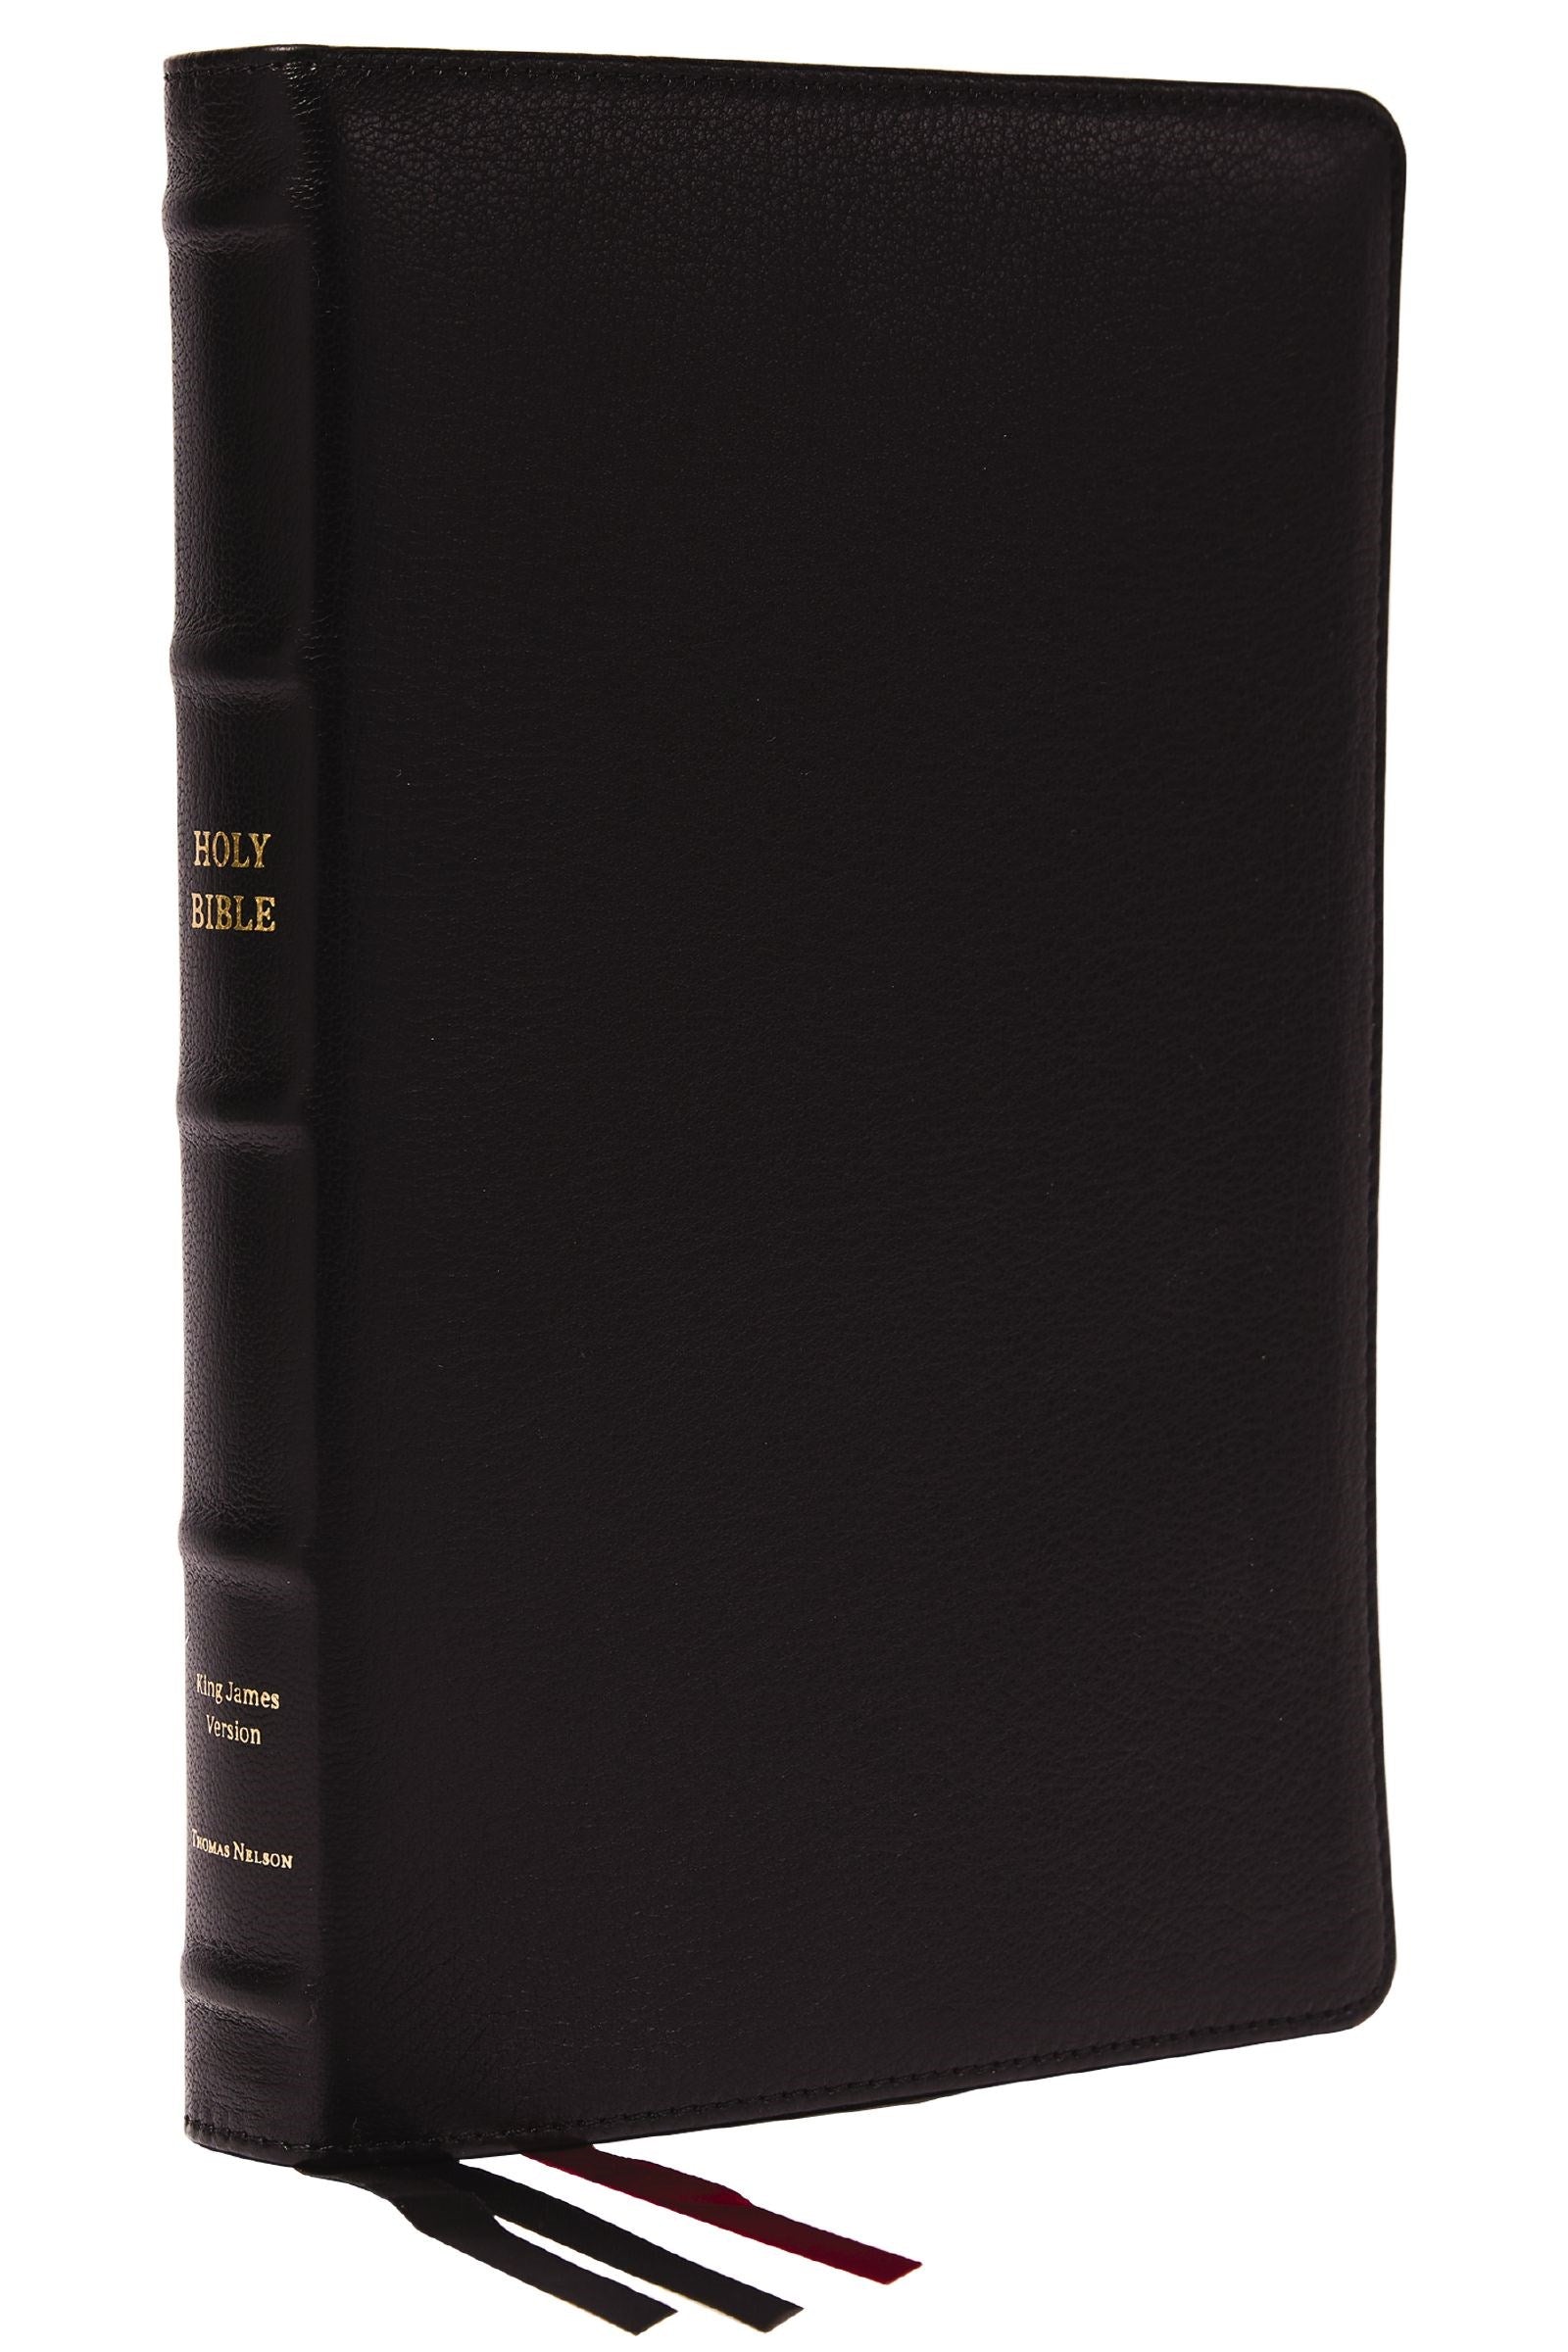 KJV, Thinline Bible, Large Print, Premium Goatskin Leather, Black, Premier Collection, Red Letter, Comfort Print: Holy Bible, King James Version